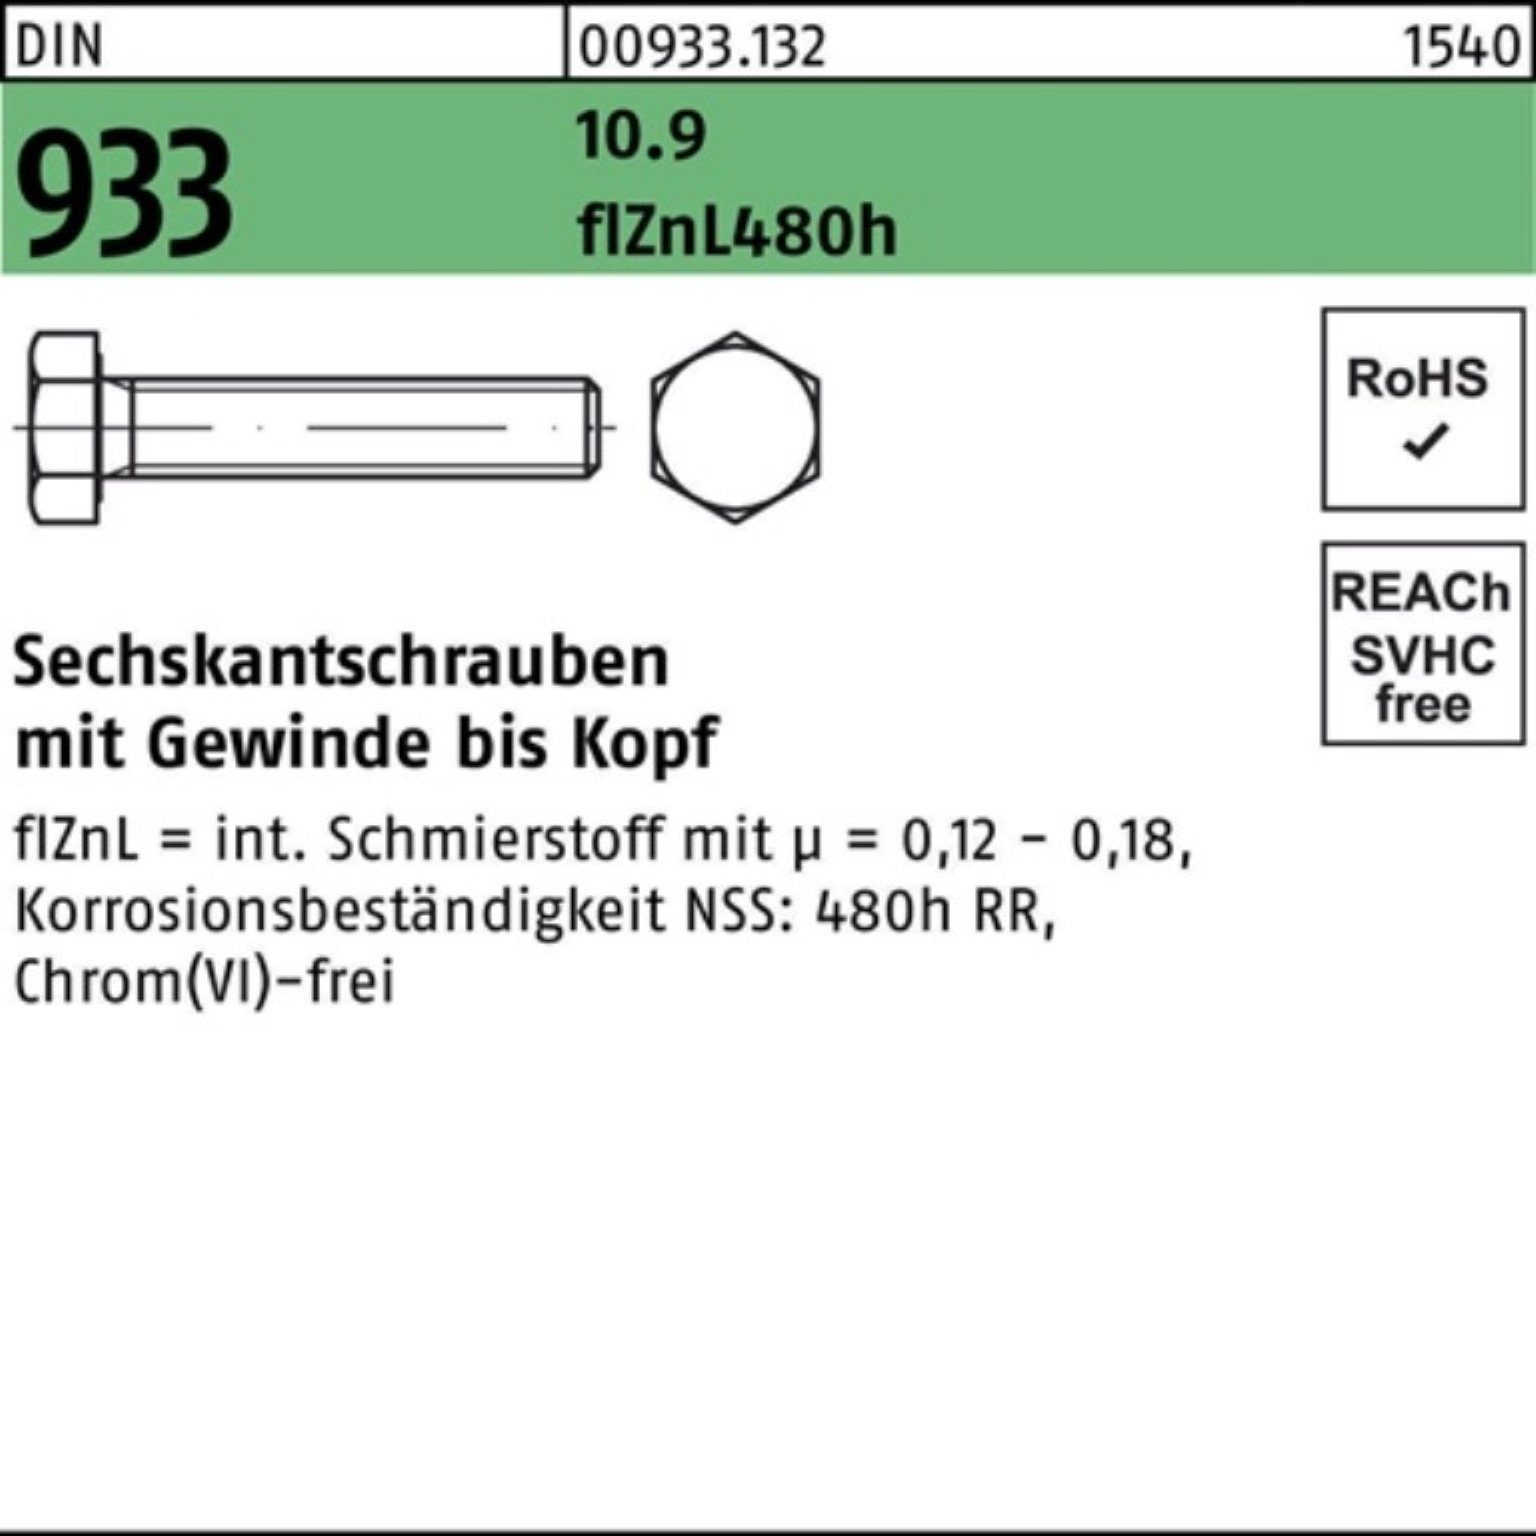 Reyher Sechskantschraube 500er Pack Sechskantschraube VG flZnL/nc/x/x/480h DIN 933 12 10.9 M6x